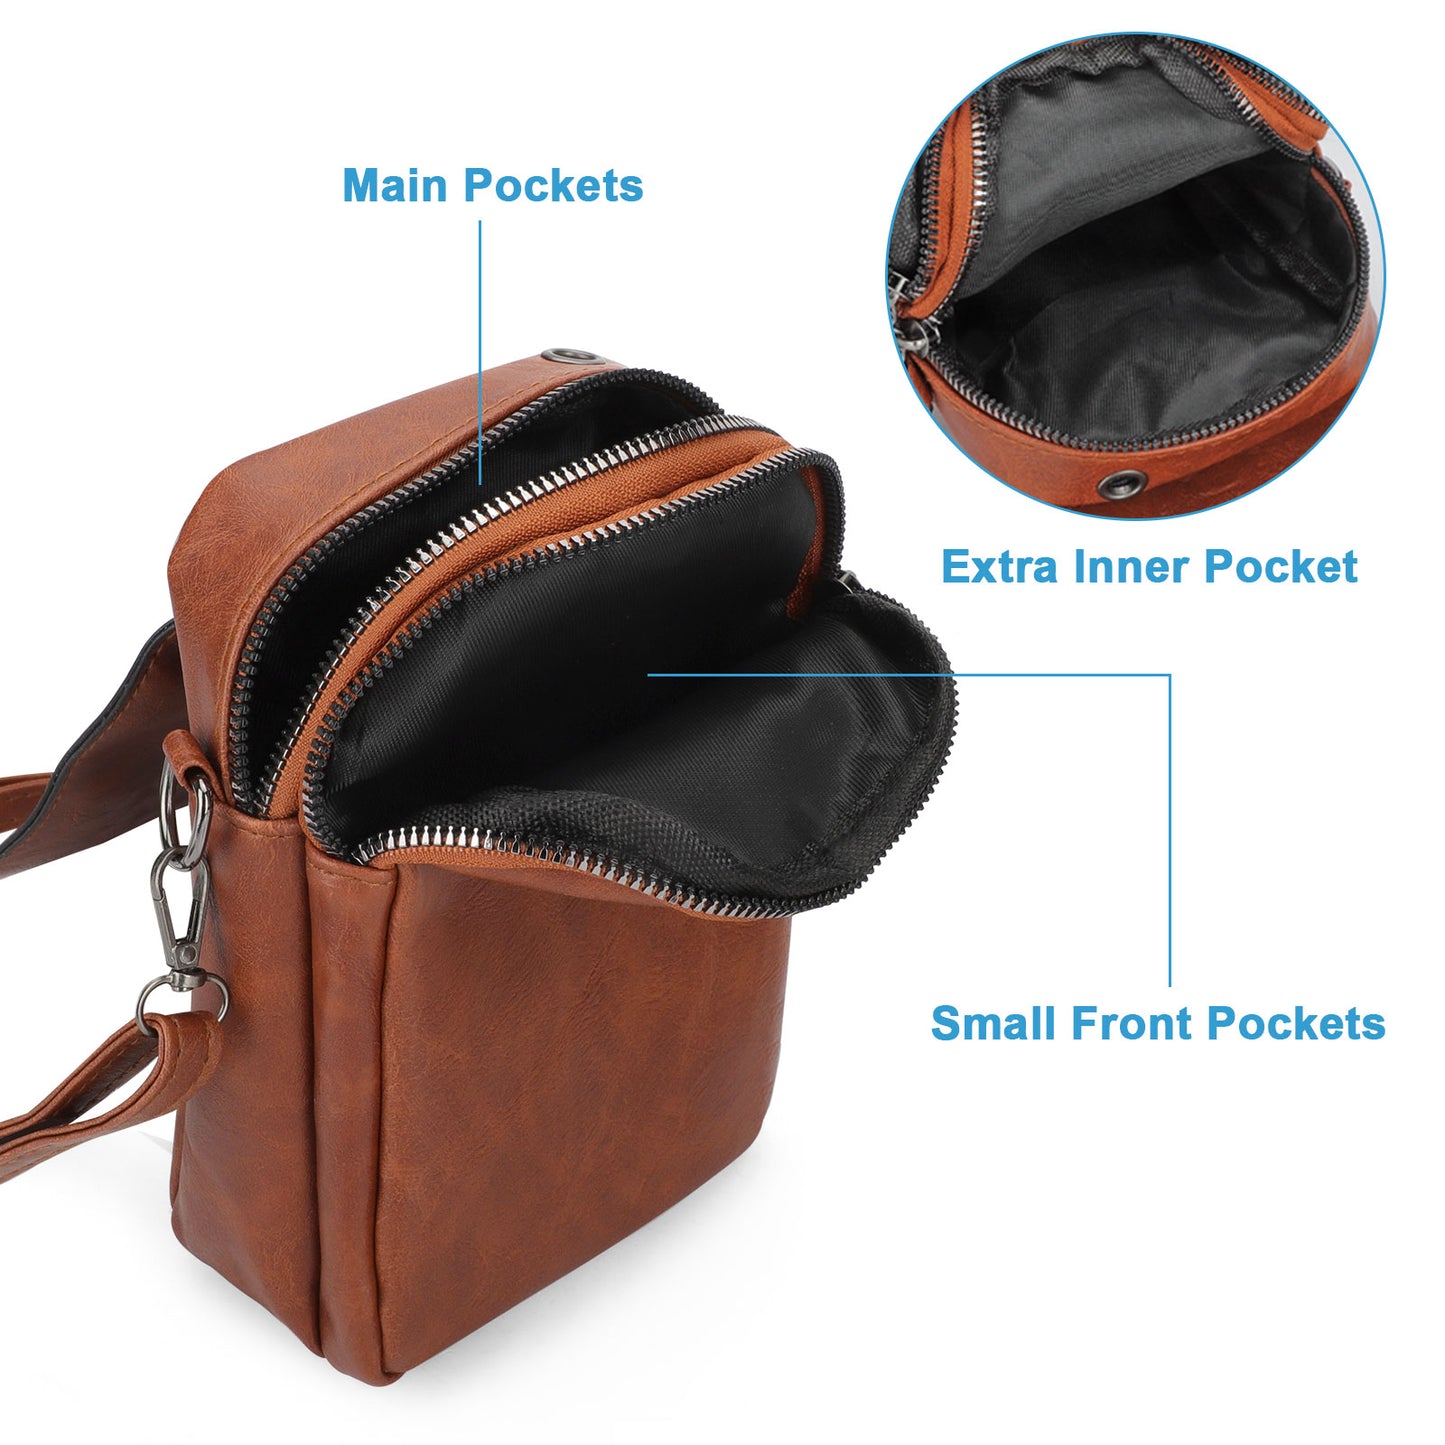 Unisex Crossbody Phone Bag with Headphone Hole - Adjustable strap PU leather Shoulder Wallet Bag Cell Phone Purse Messenger Bags for Women Men（Black)